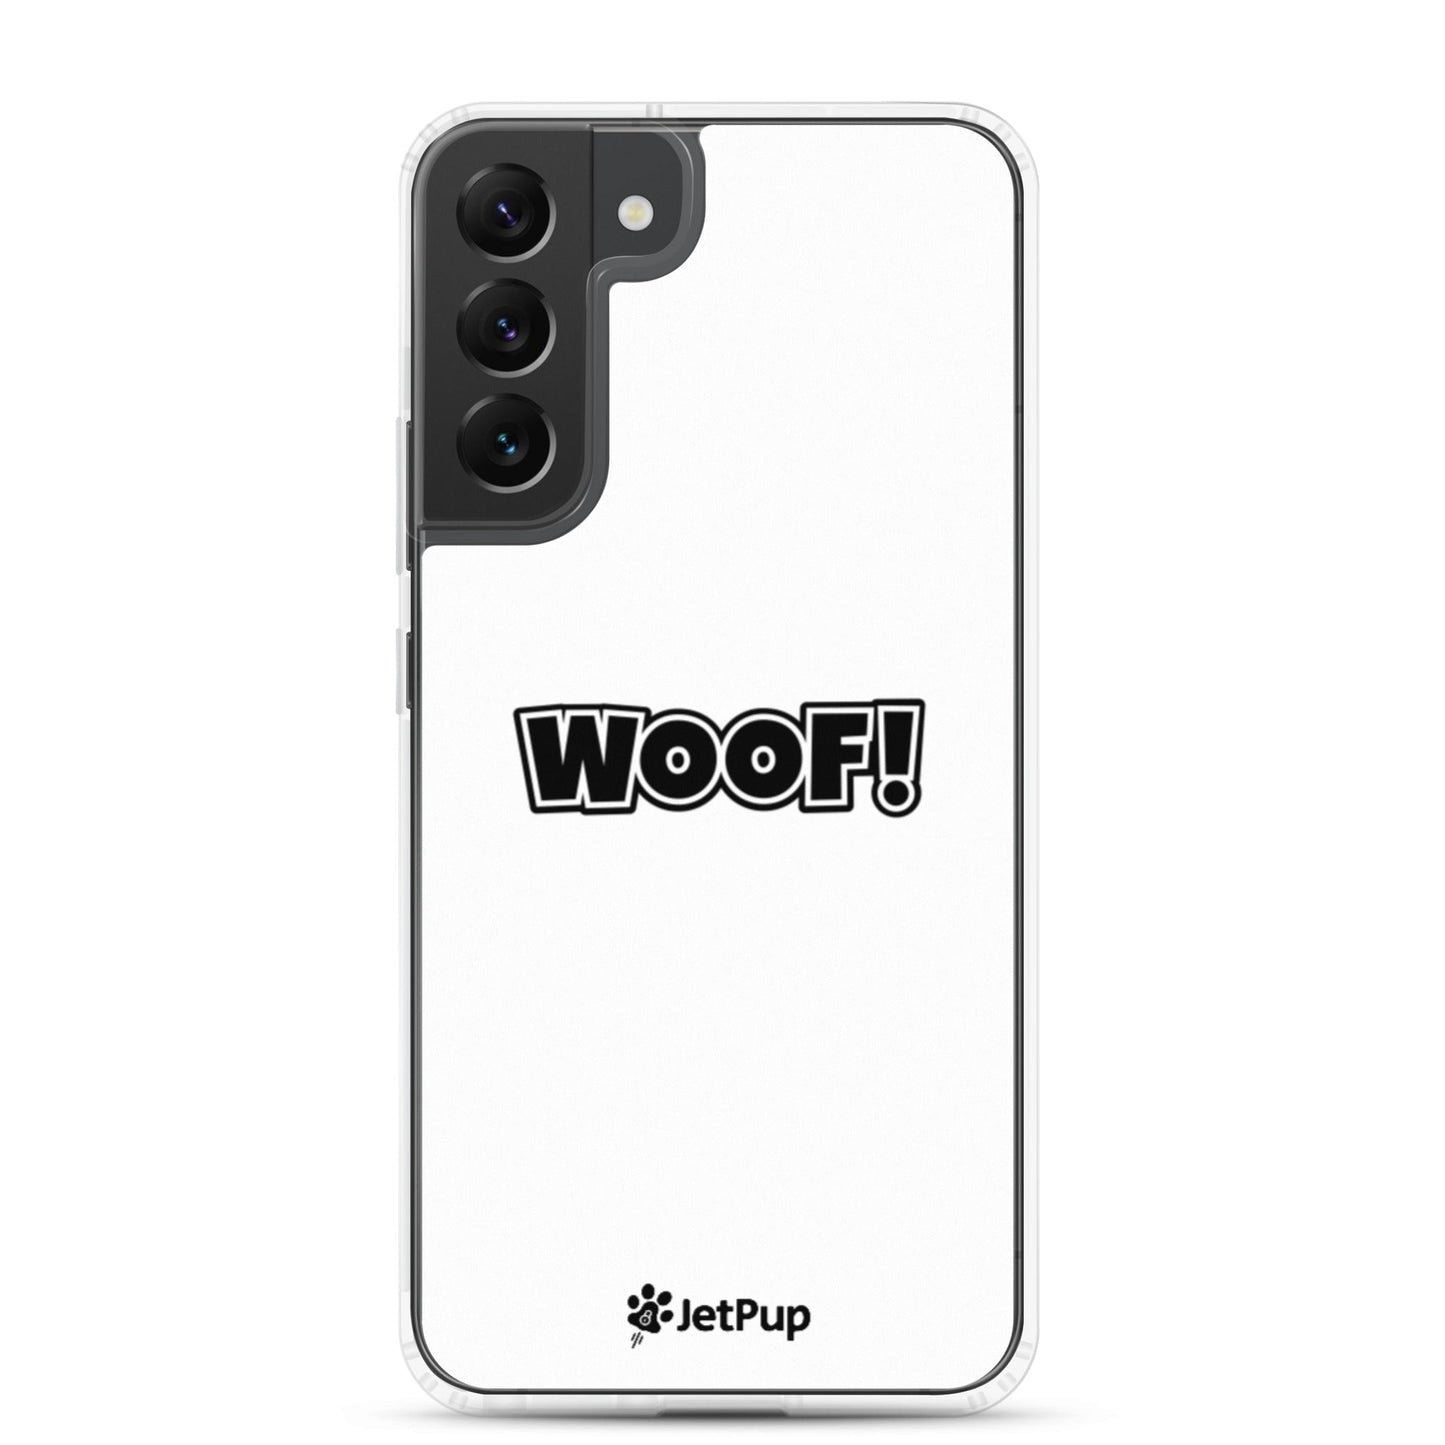 Woof Samsung Case - White - JetPup